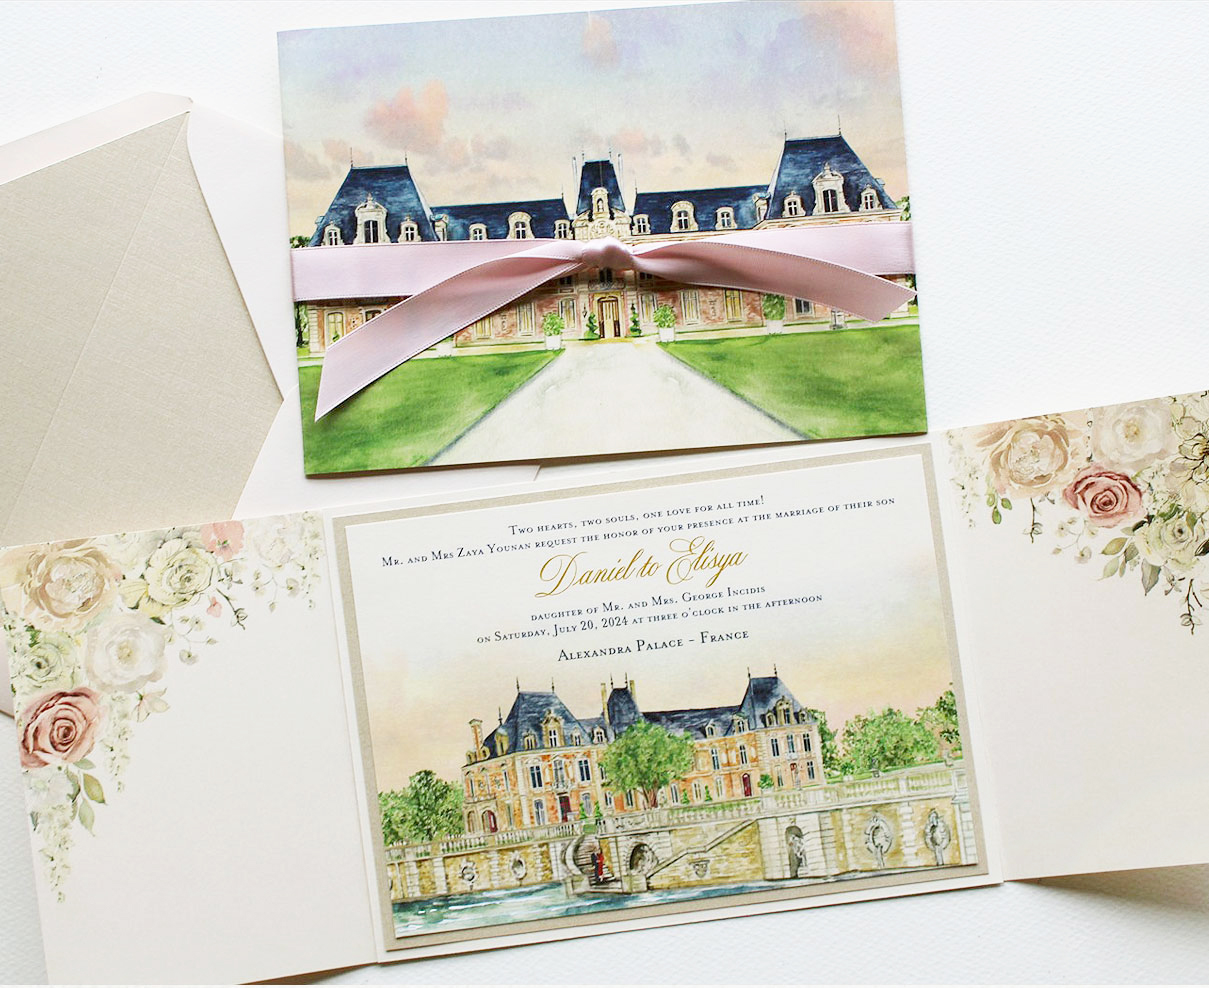 alexandra-palace-france-wedding-invitations